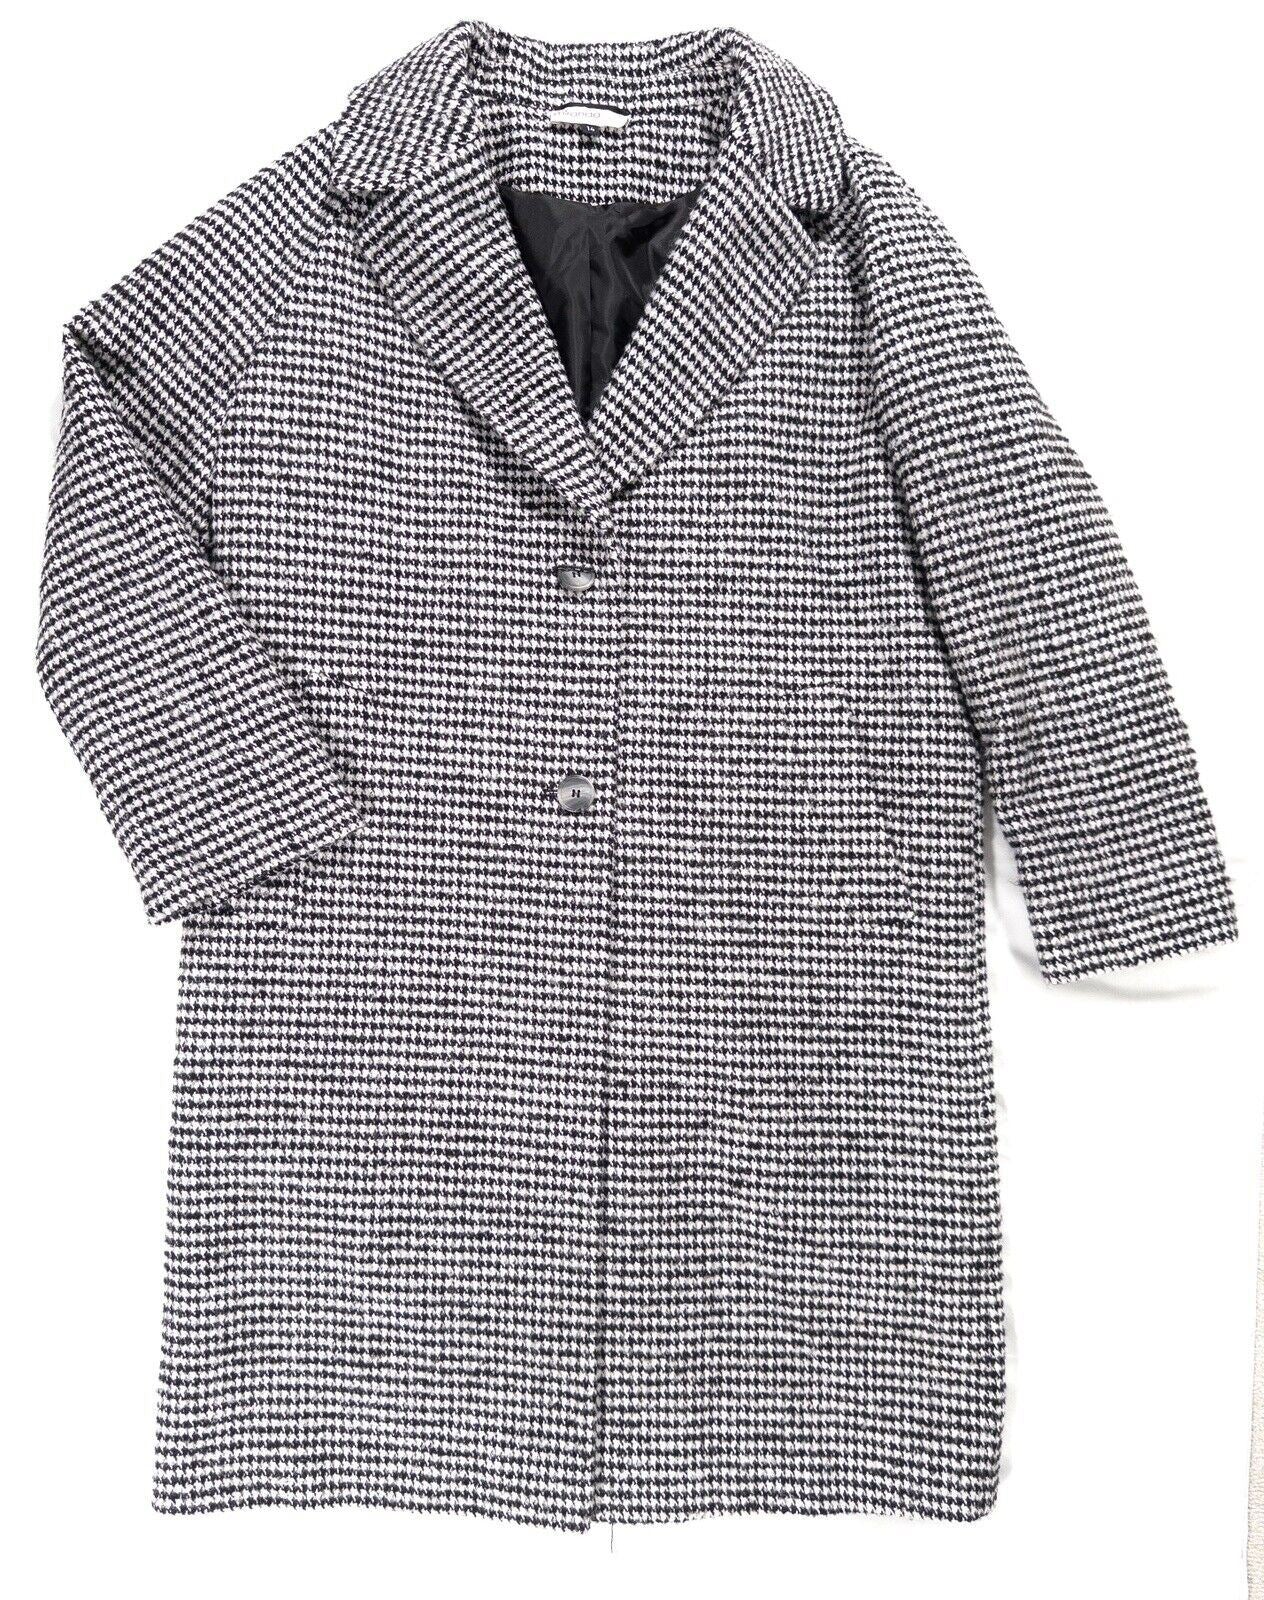 MIRANDA DUNN Womens Houndtooth Coat Jacket Wool Blend Black and White Size UK 14